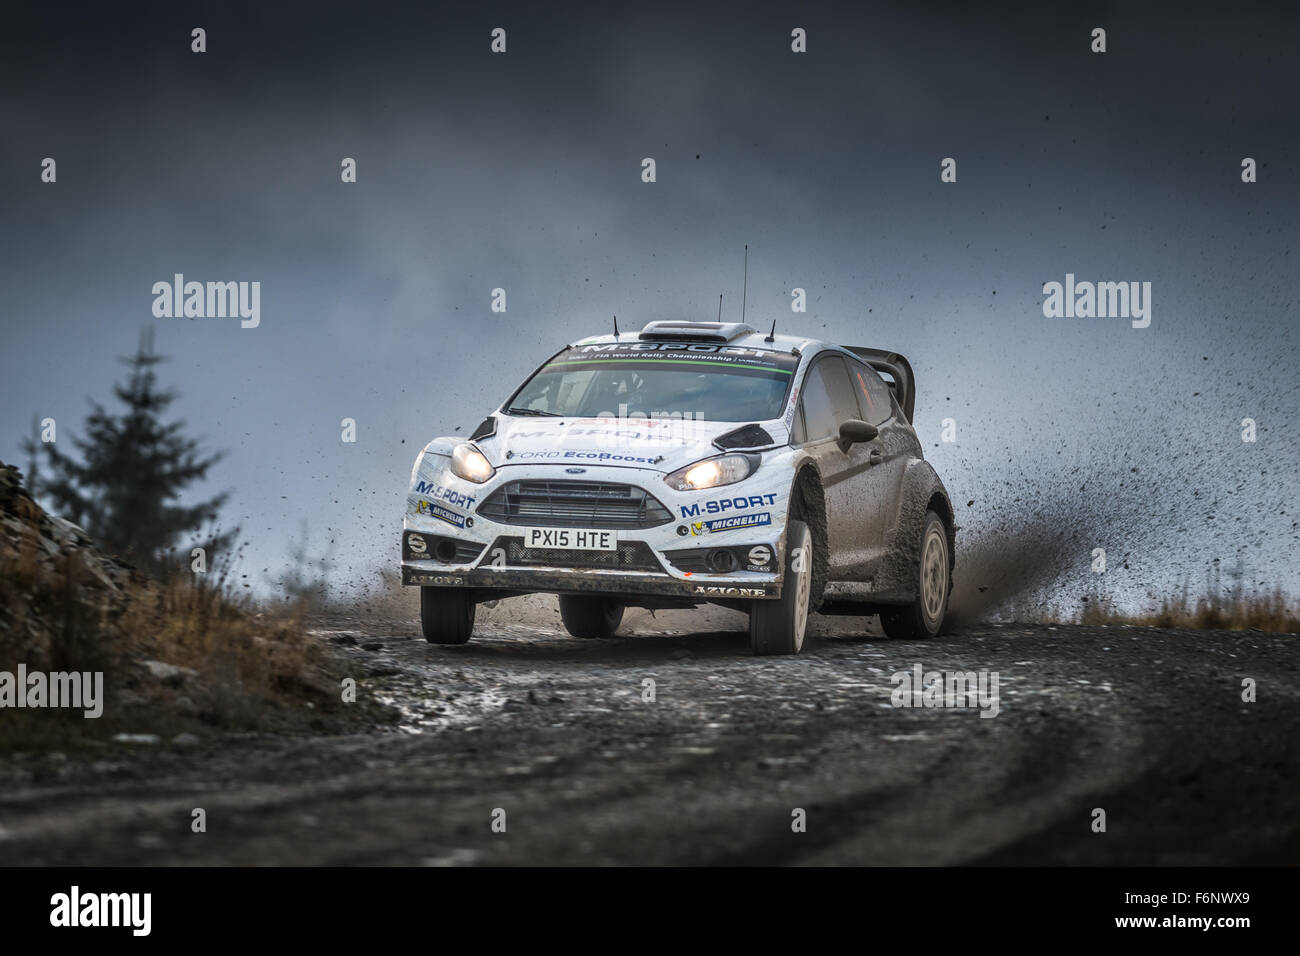 Ott Tänak & Raigo Molder, SS6 Myherin Wales Rallye GB 2015 WRC. 06 M-Sport WRT, Ford Fiesta WRC, Aktion Stockfoto